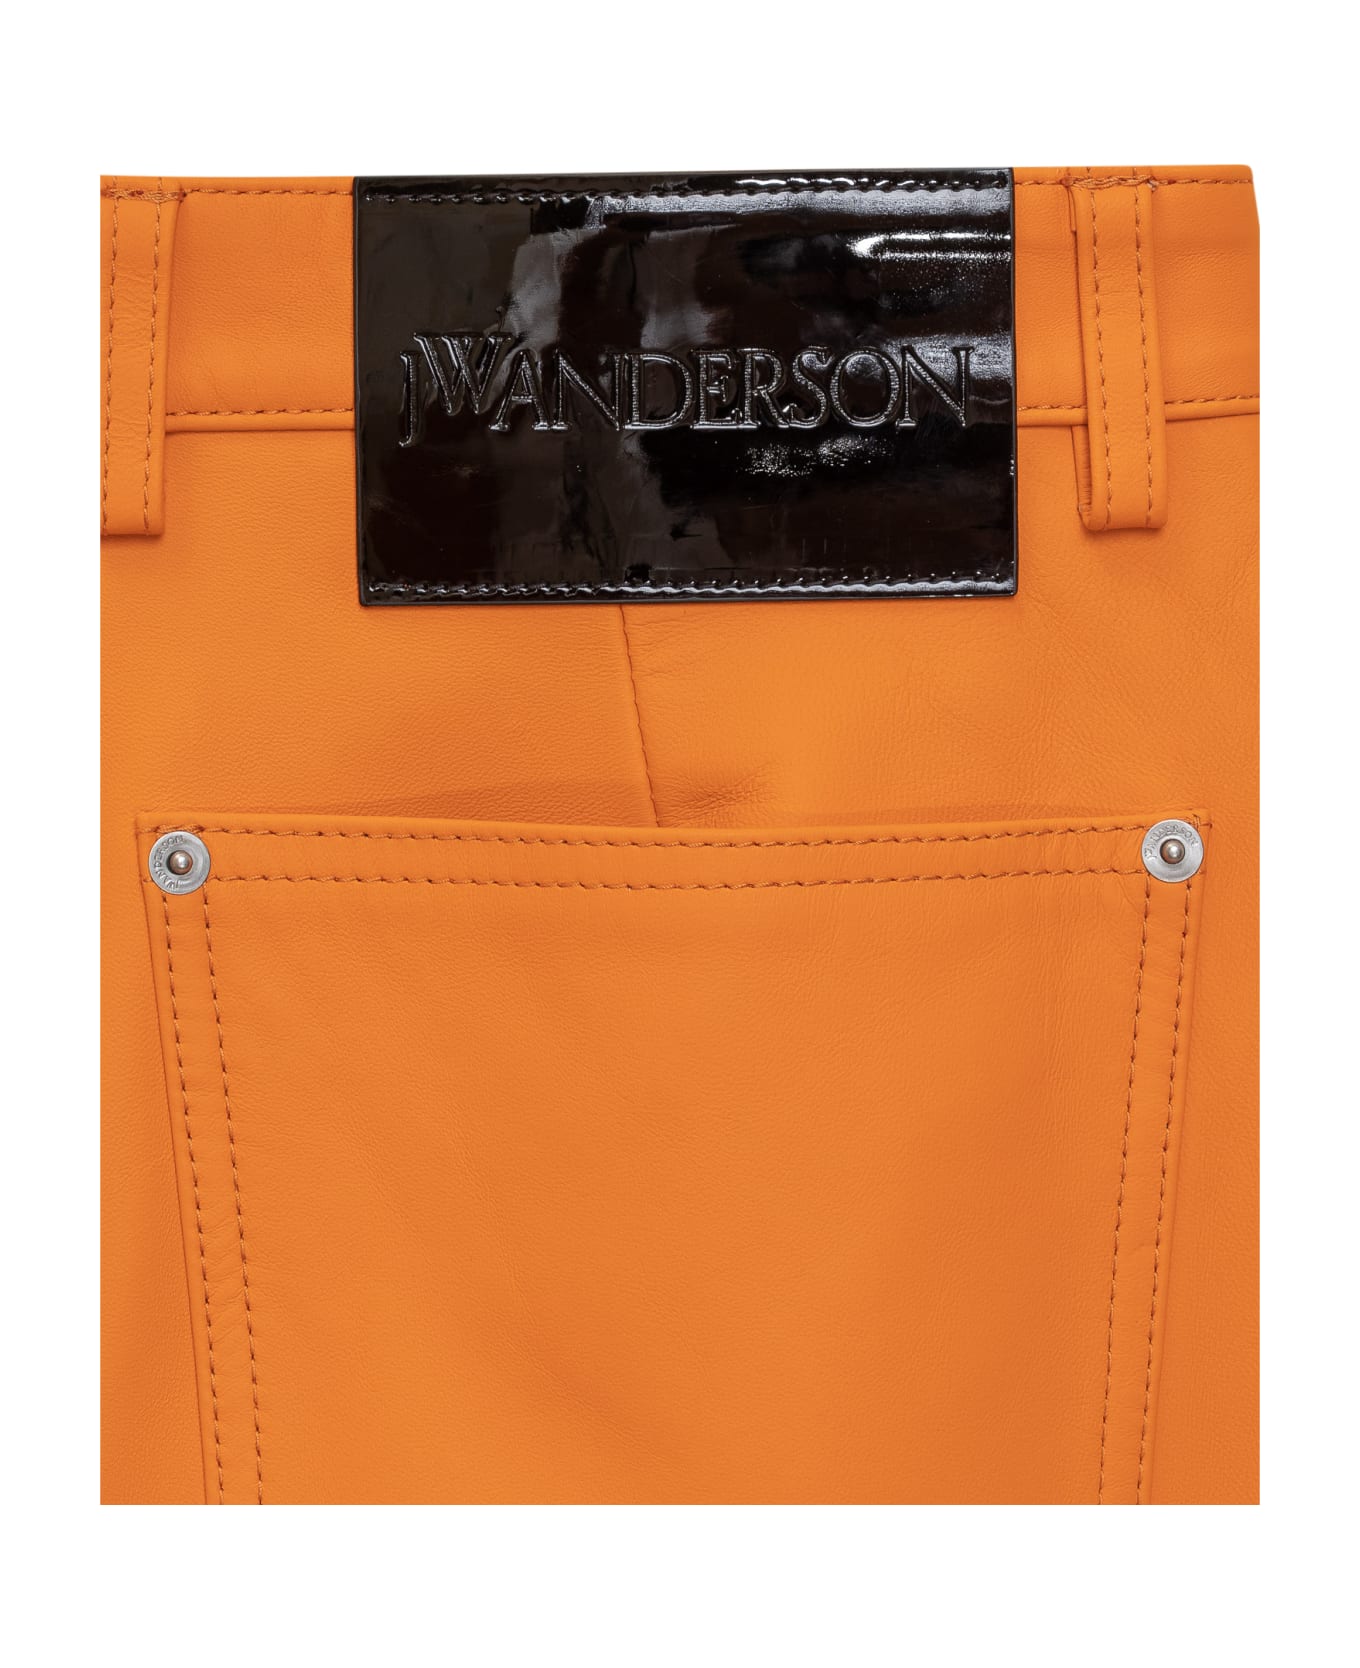 J.W. Anderson Orange Leather Pant - Orange